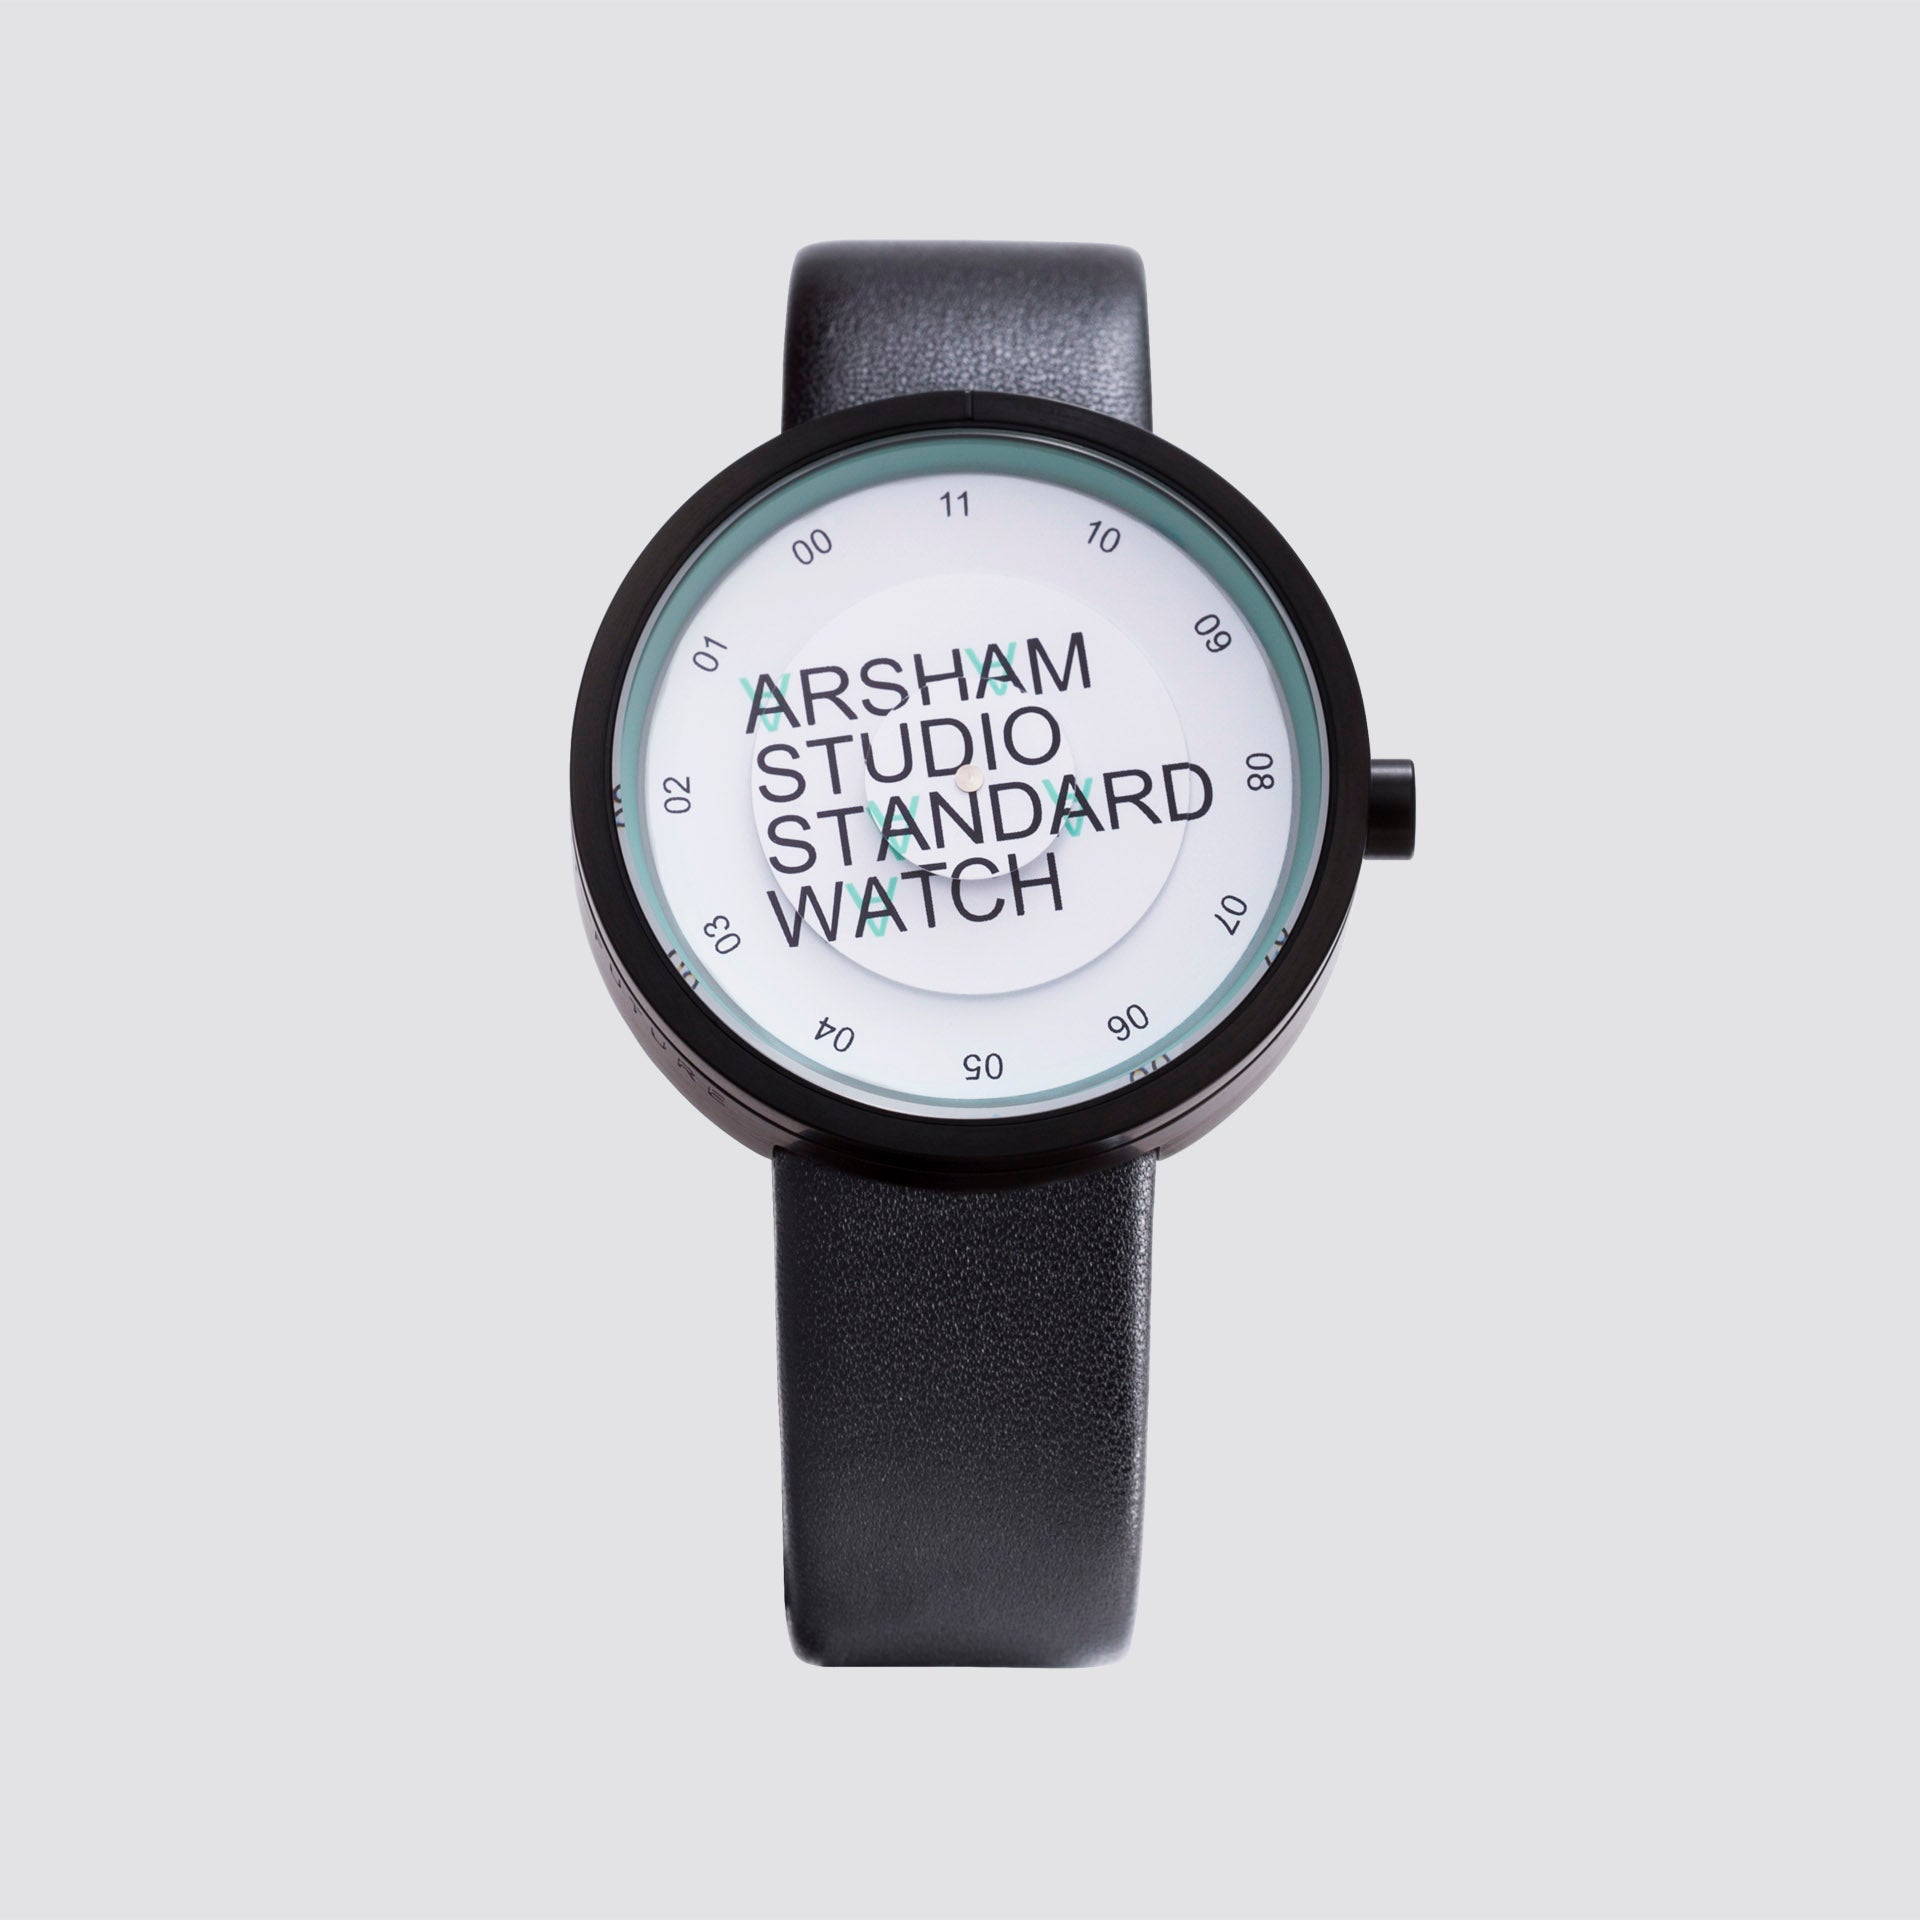 DANIEL ARSHAM x ANICORN Automatic Watches - LIMITED EDITION